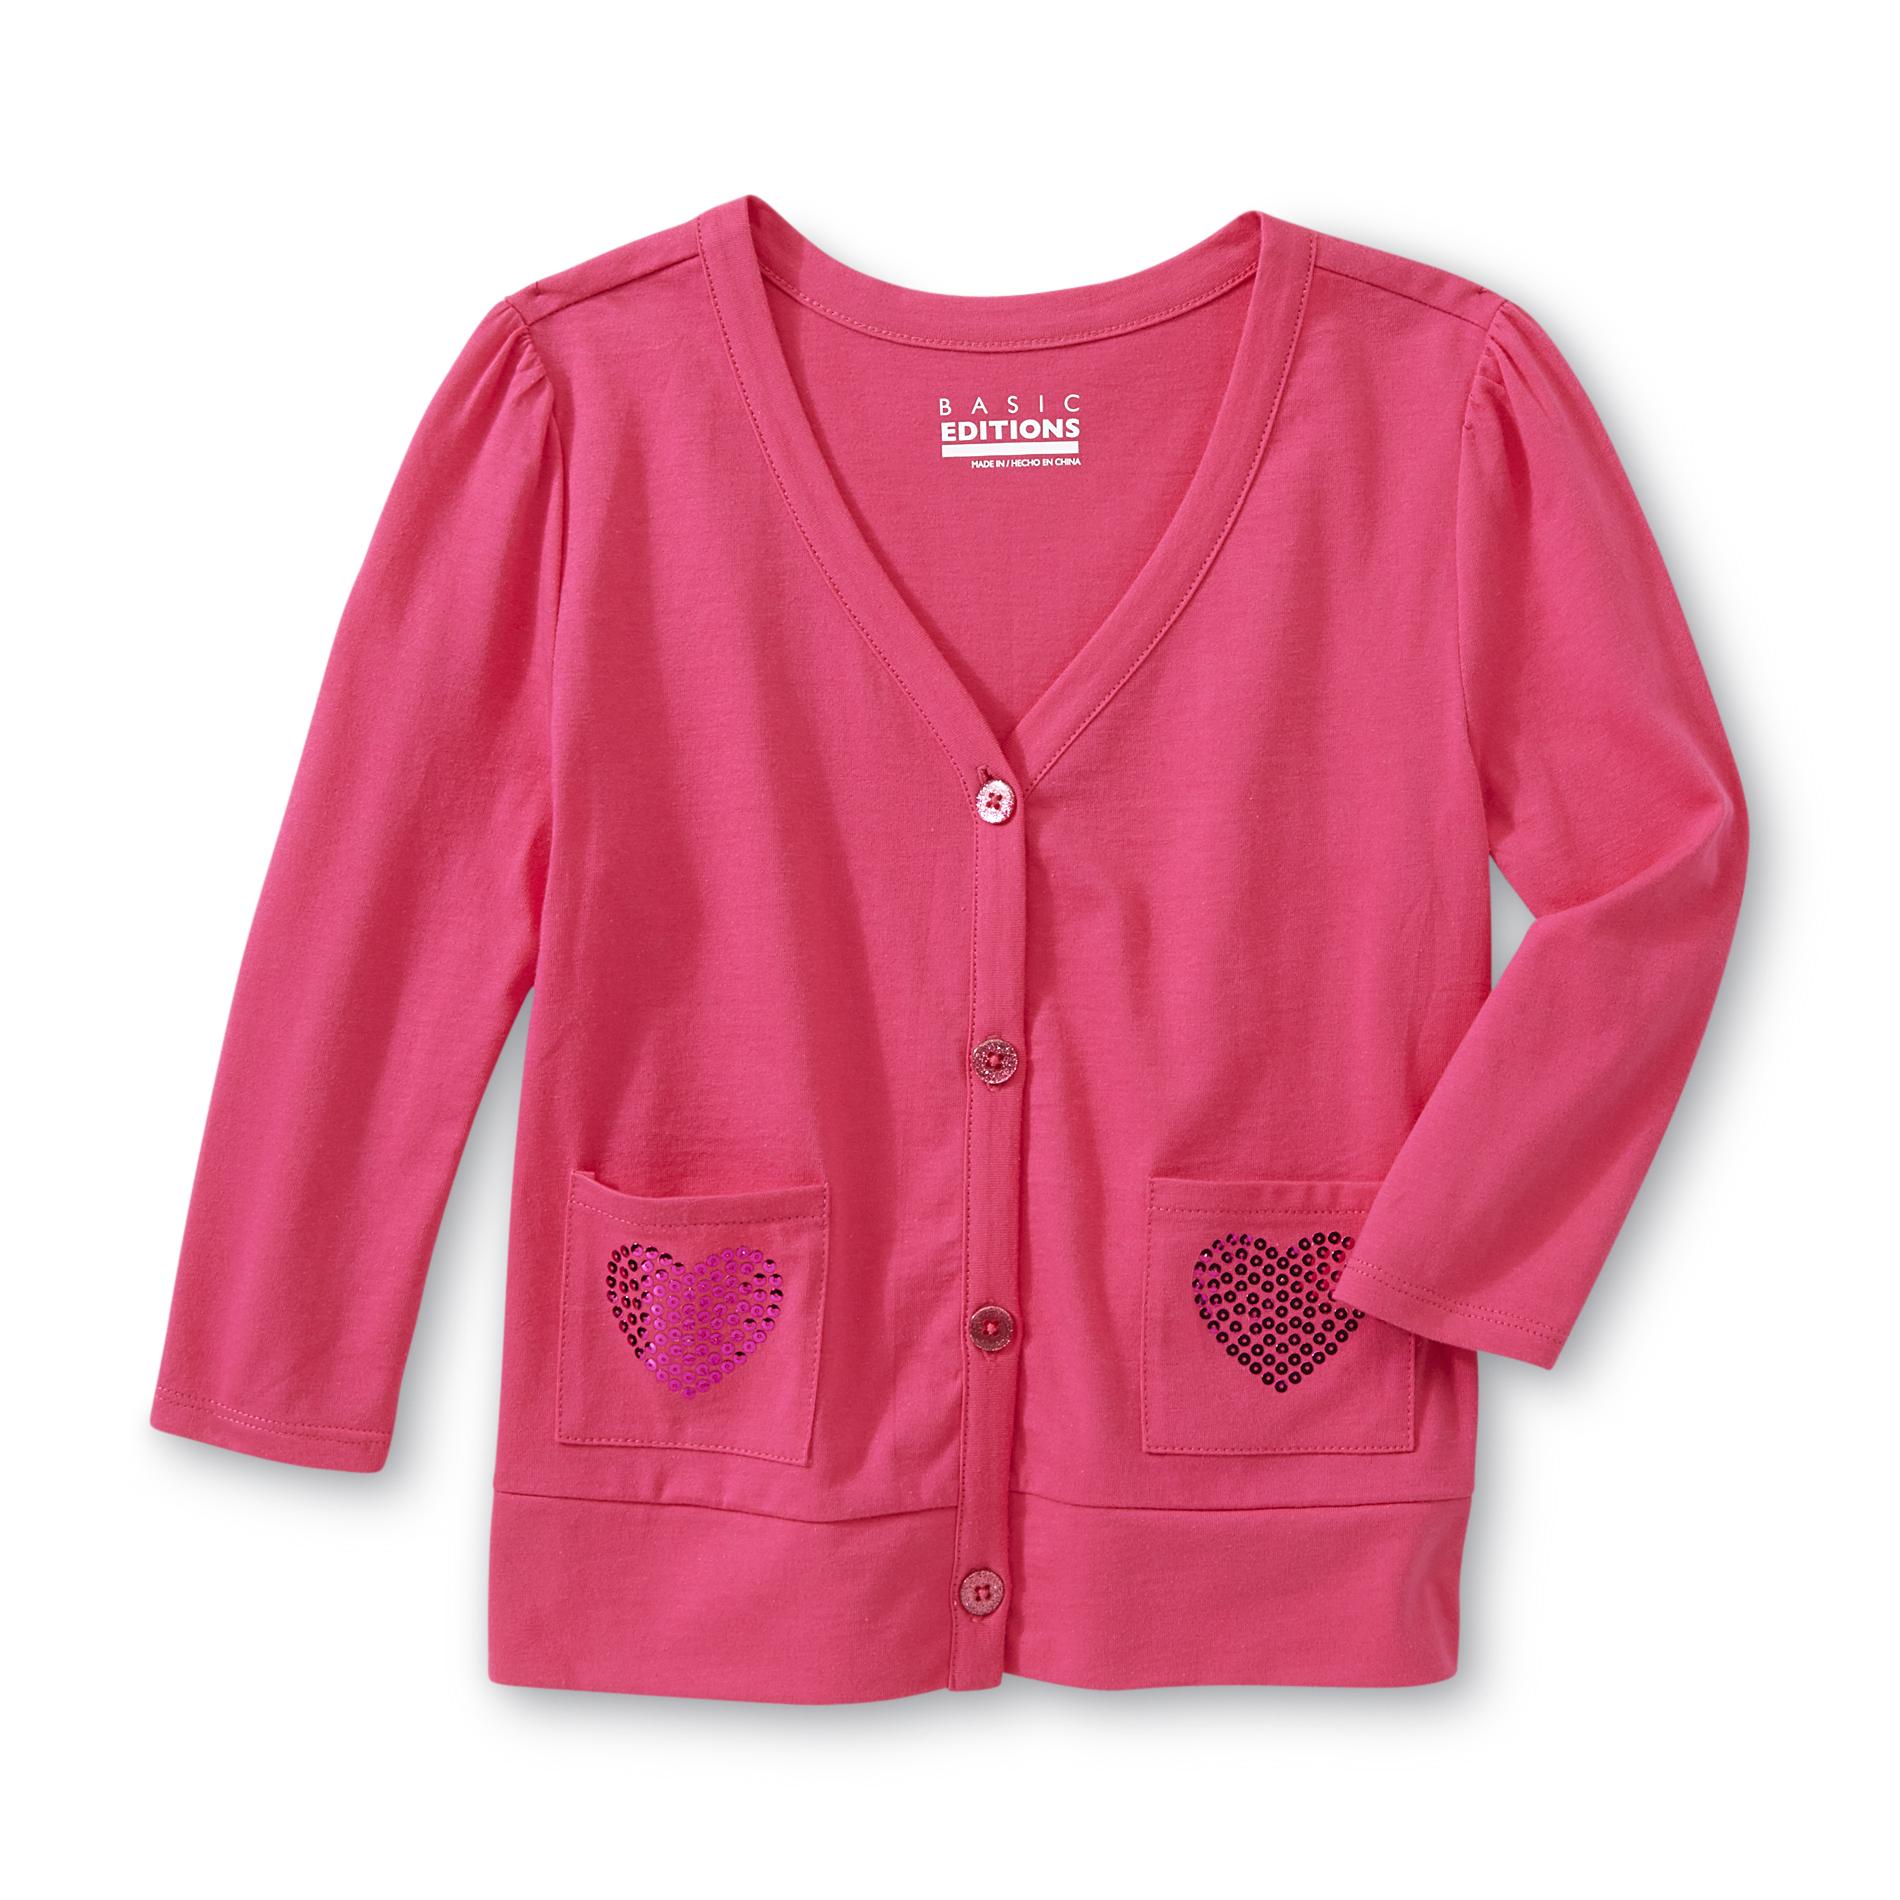 Basic Editions Girl's Sequin Pocket Cardigan - Hearts